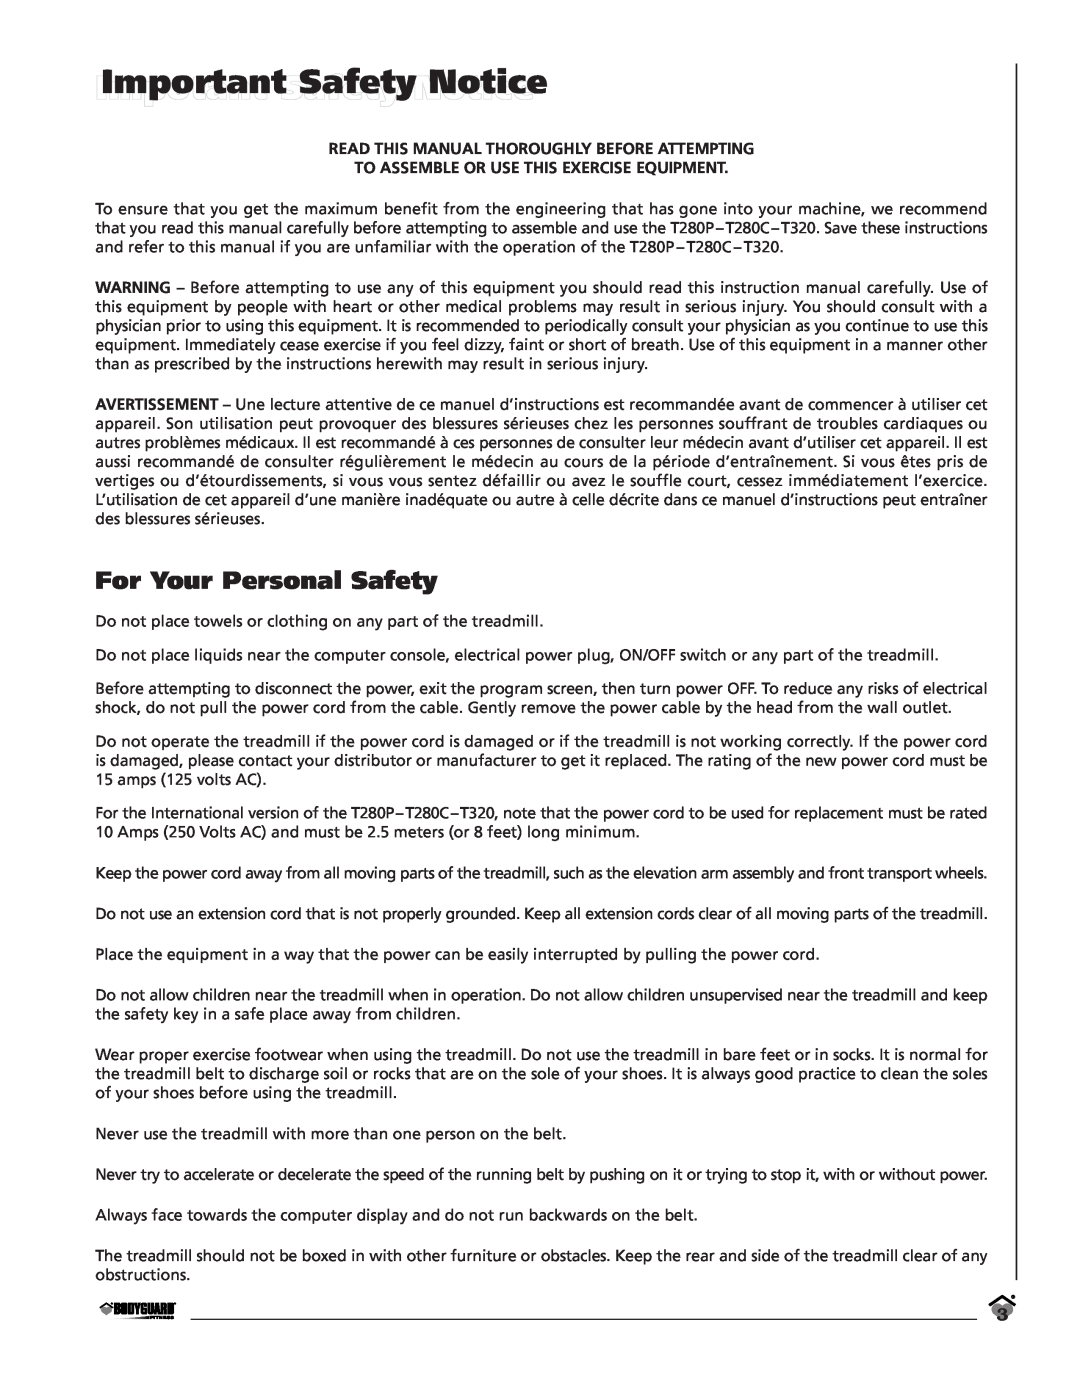 Bodyguard T320, T280C, LT280P IMPORTANTImportant SafetySAFETYNoticeNOTICE, Impotant Safety Notice, For Your Personal Safety 